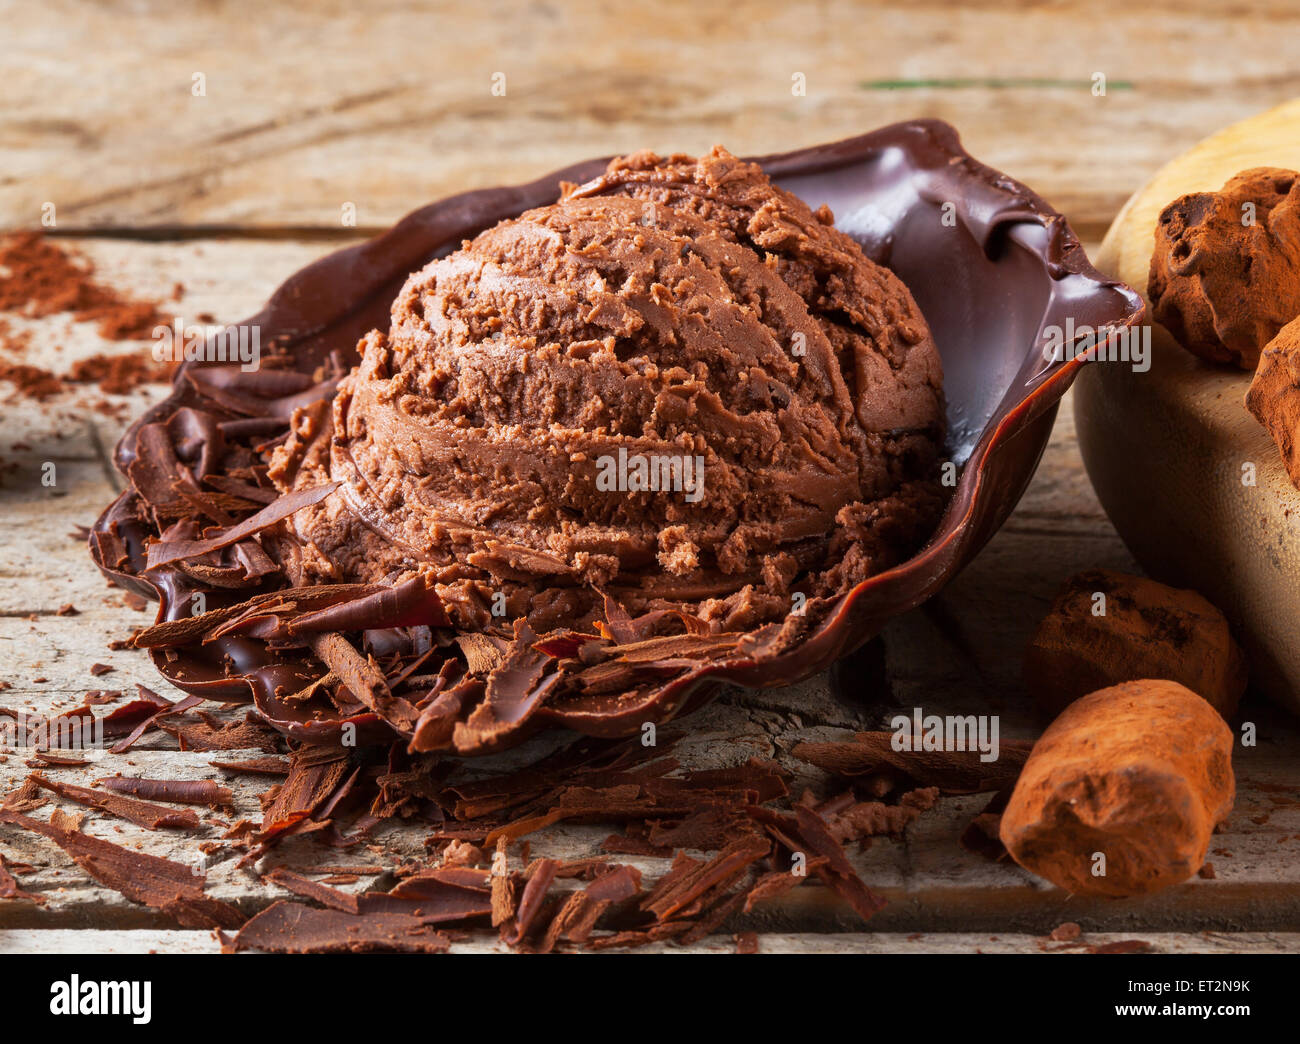 https://c8.alamy.com/comp/ET2N9K/a-scoop-of-home-made-chocolate-ice-cream-ET2N9K.jpg